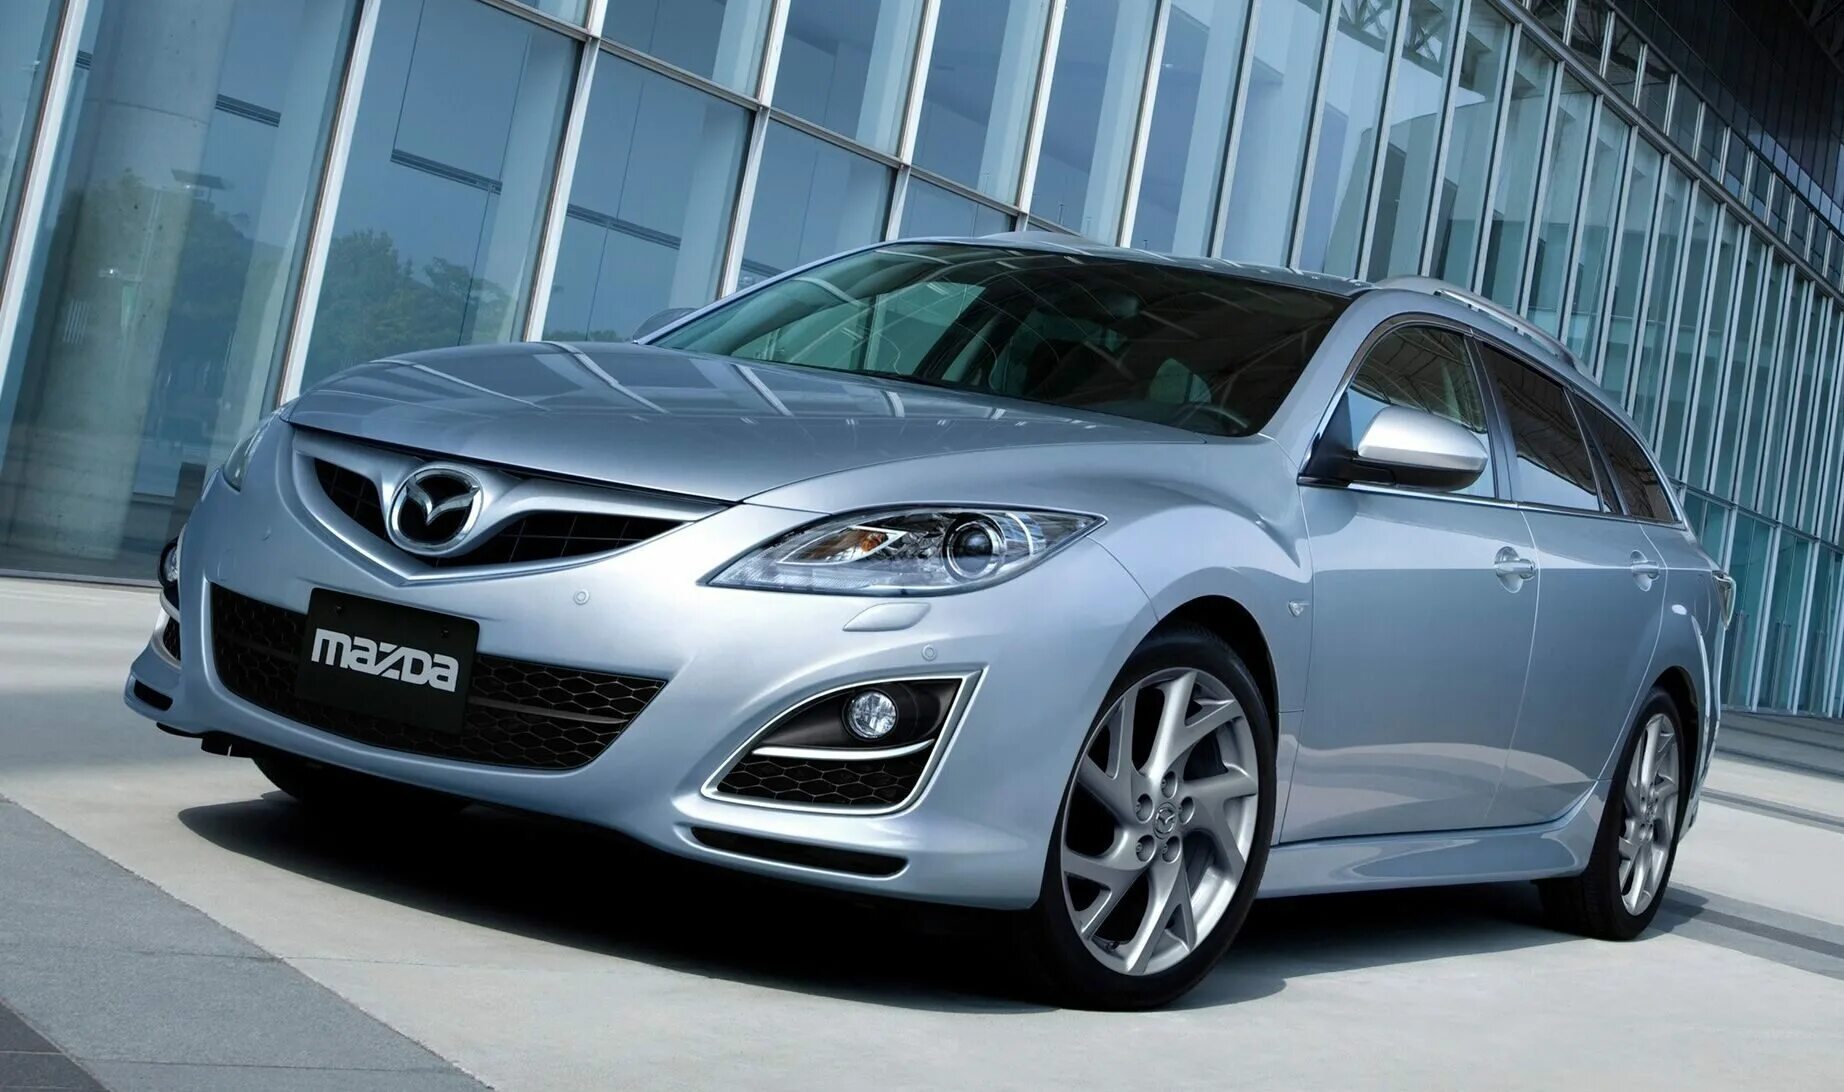 Мазда 6 2010г. Mazda 6 2010. Мазда 6 2 поколение. Мазда 6 GH. Мазда 6 2 поколение Рестайлинг.